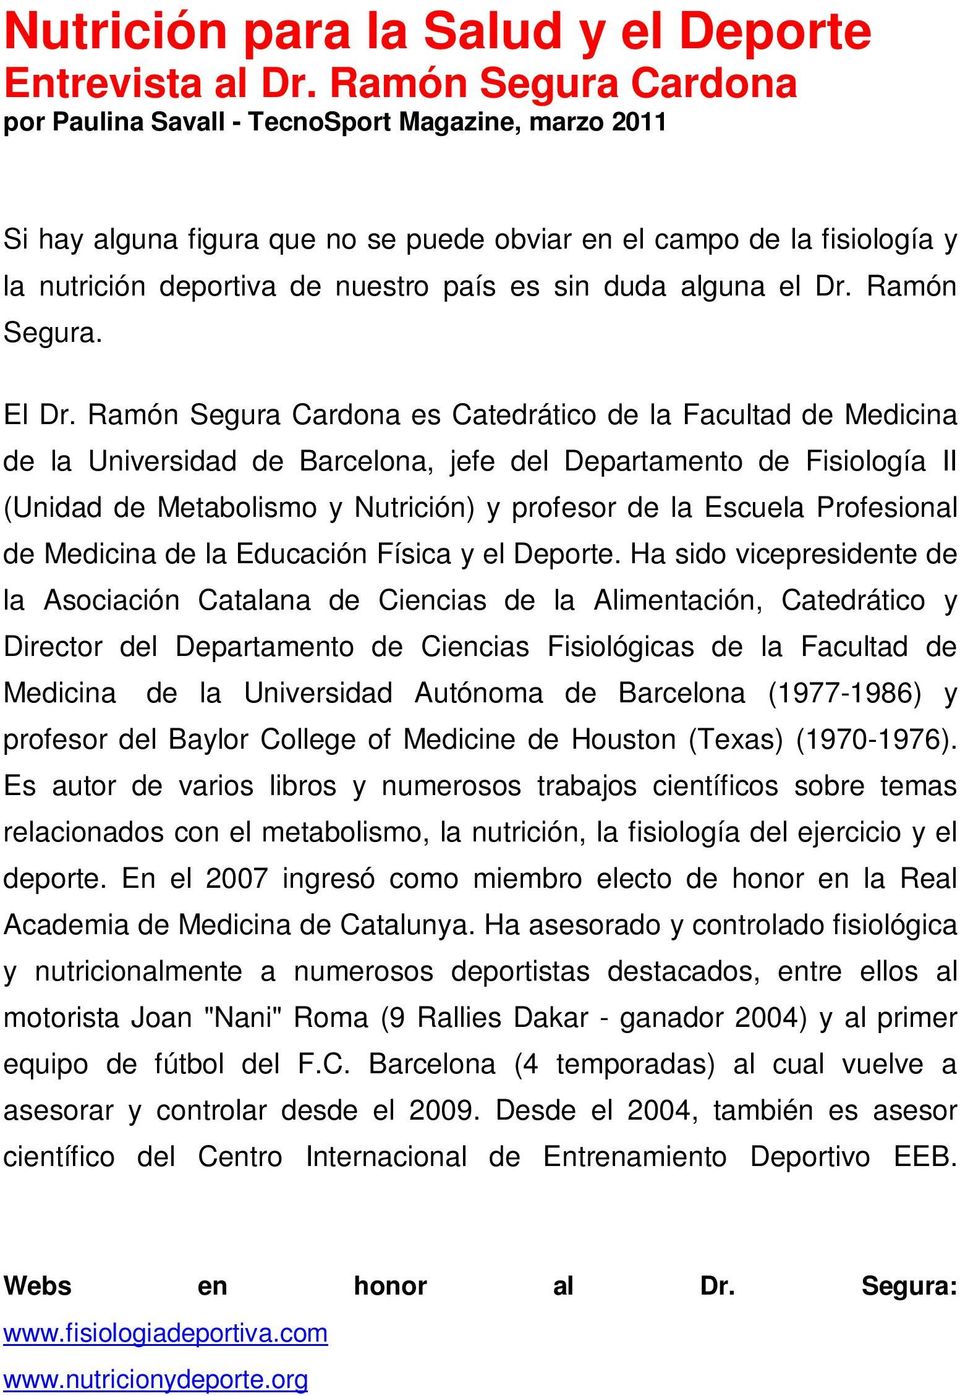 alguna el Dr. Ramón Segura. El Dr.